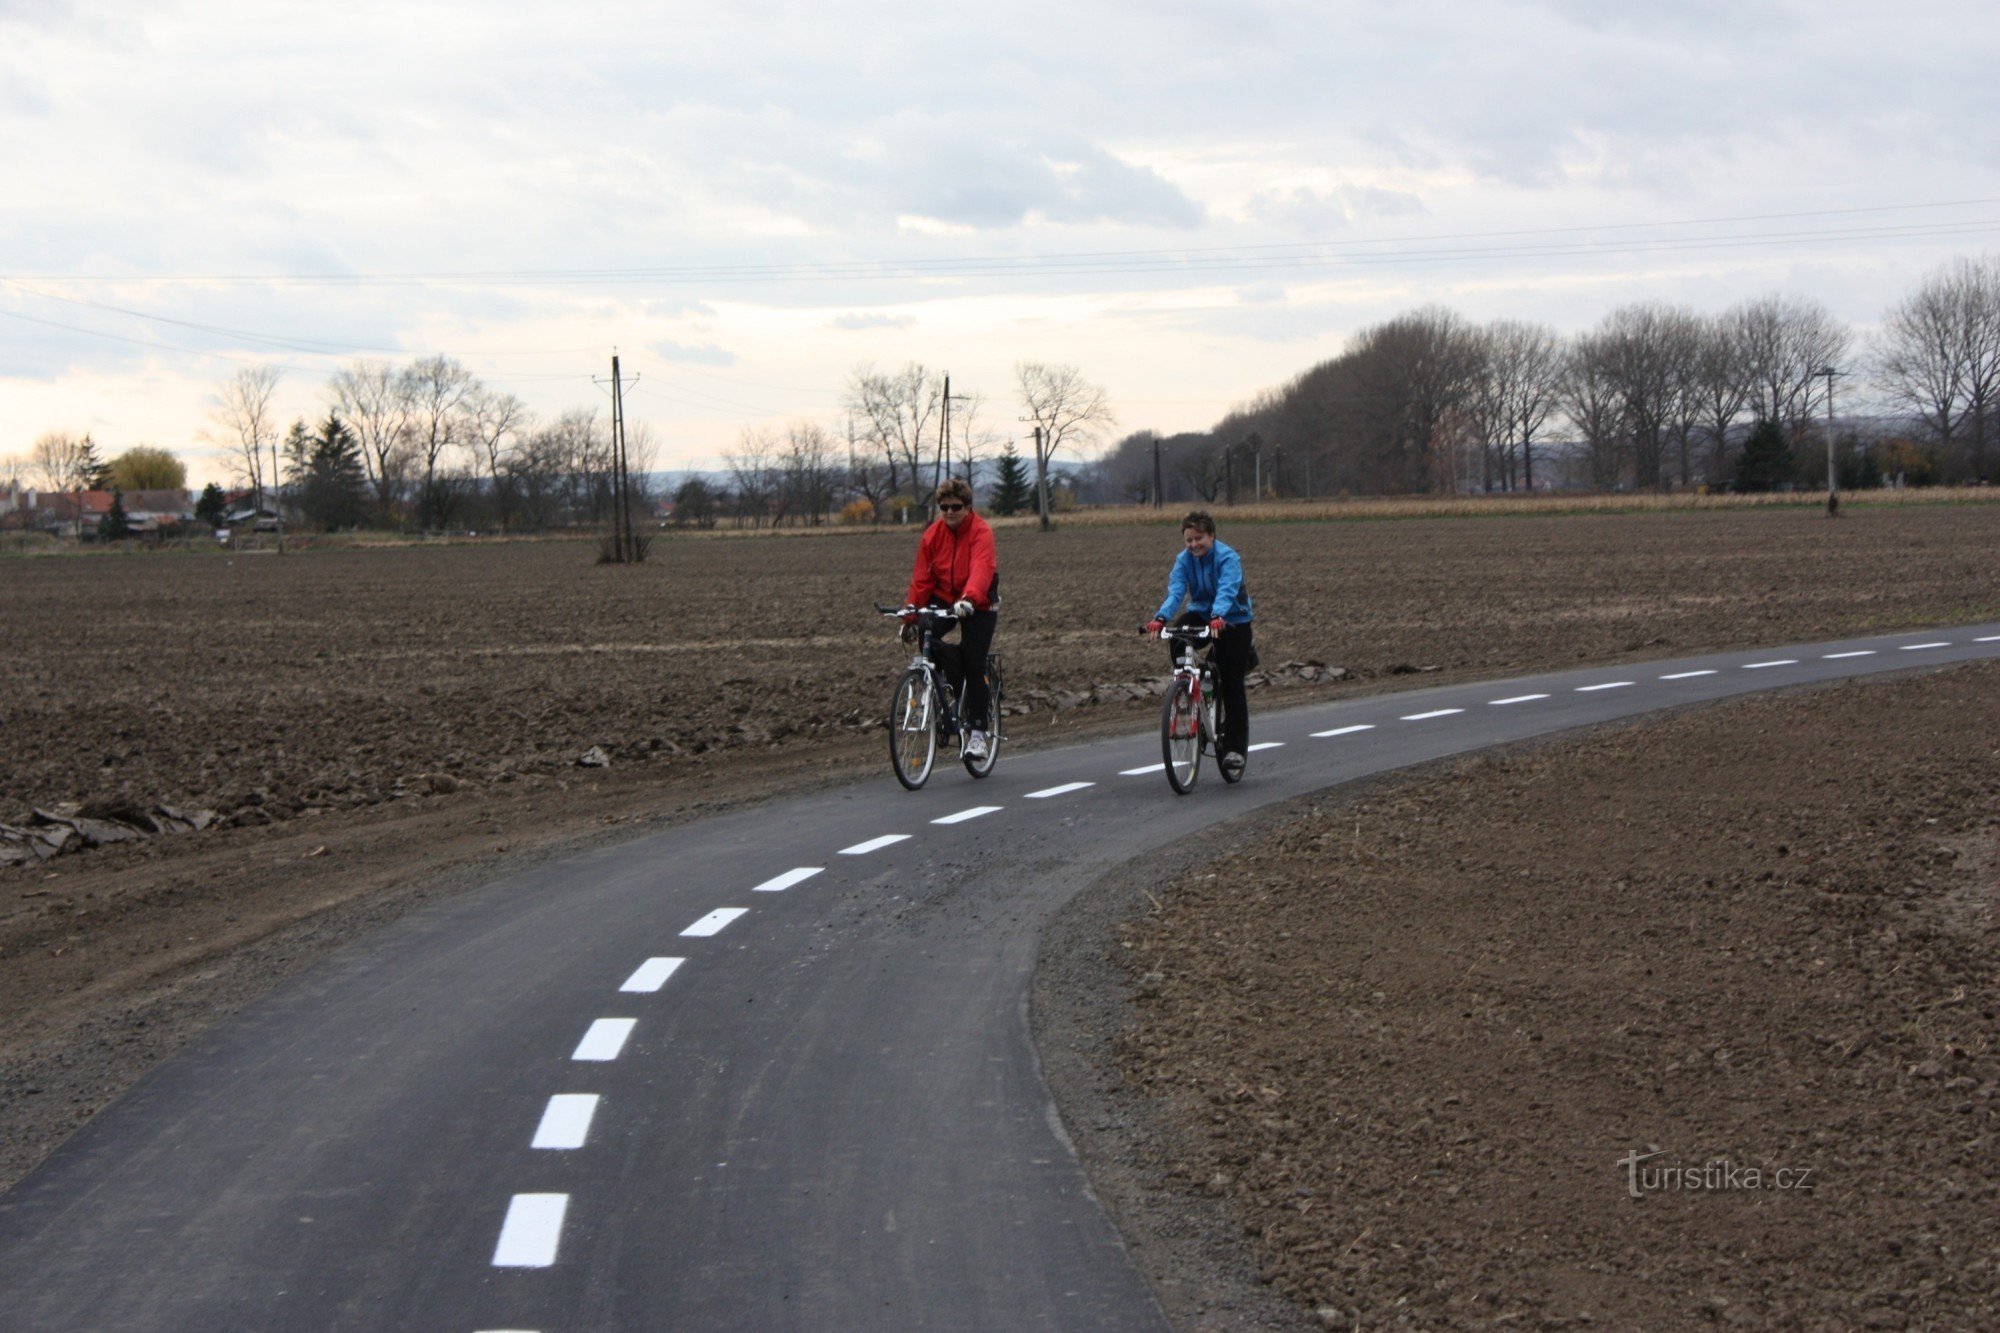 From Němčice to vrchoslavice along the cycle path